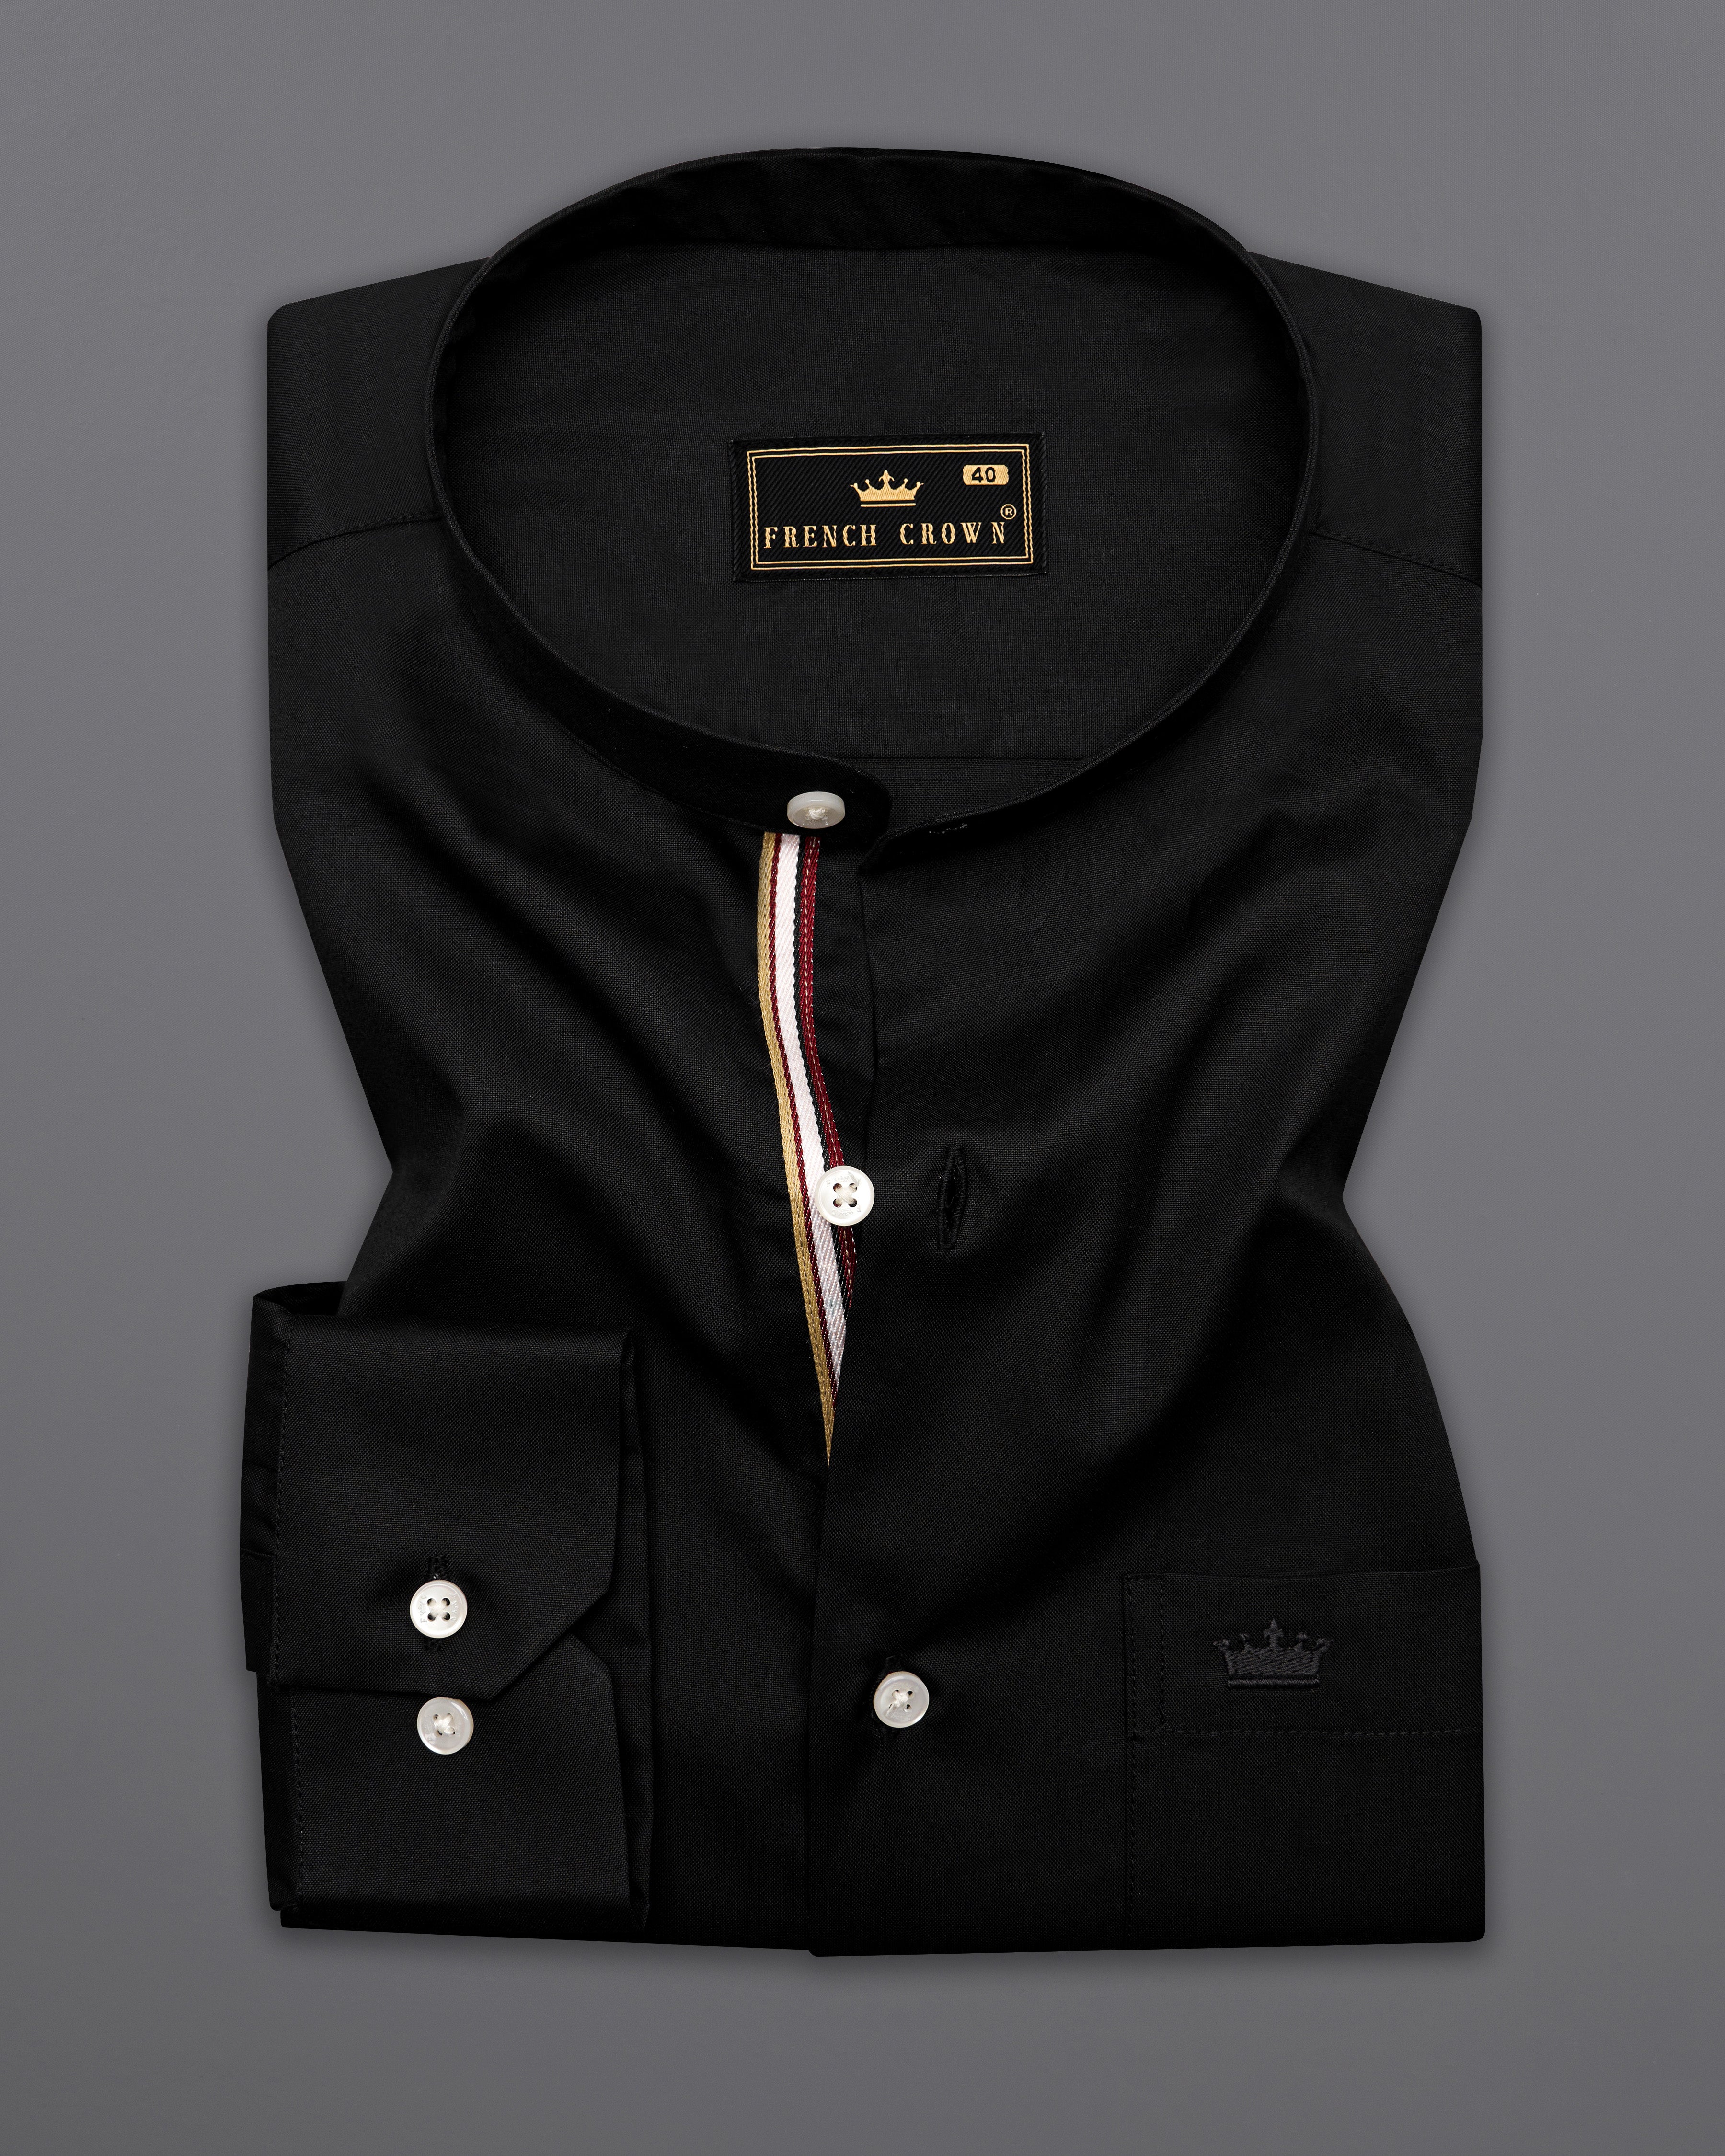 Jade Black Royal Oxford Shirt